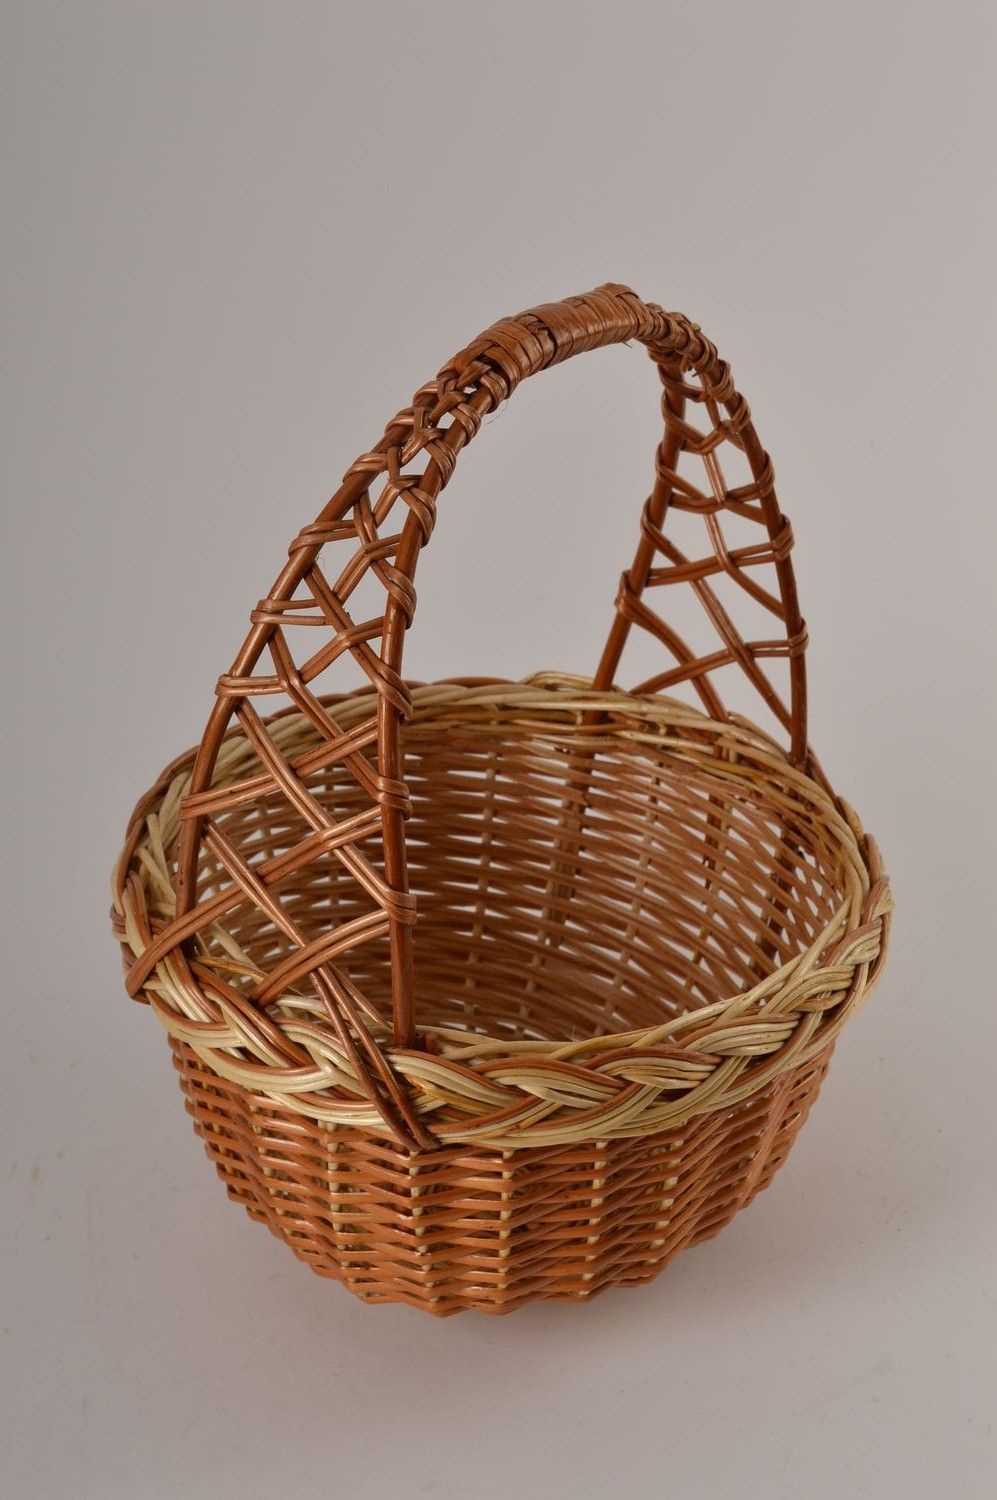 Unusual handmade woven basket interior decorating home goods gift ideas photo 4